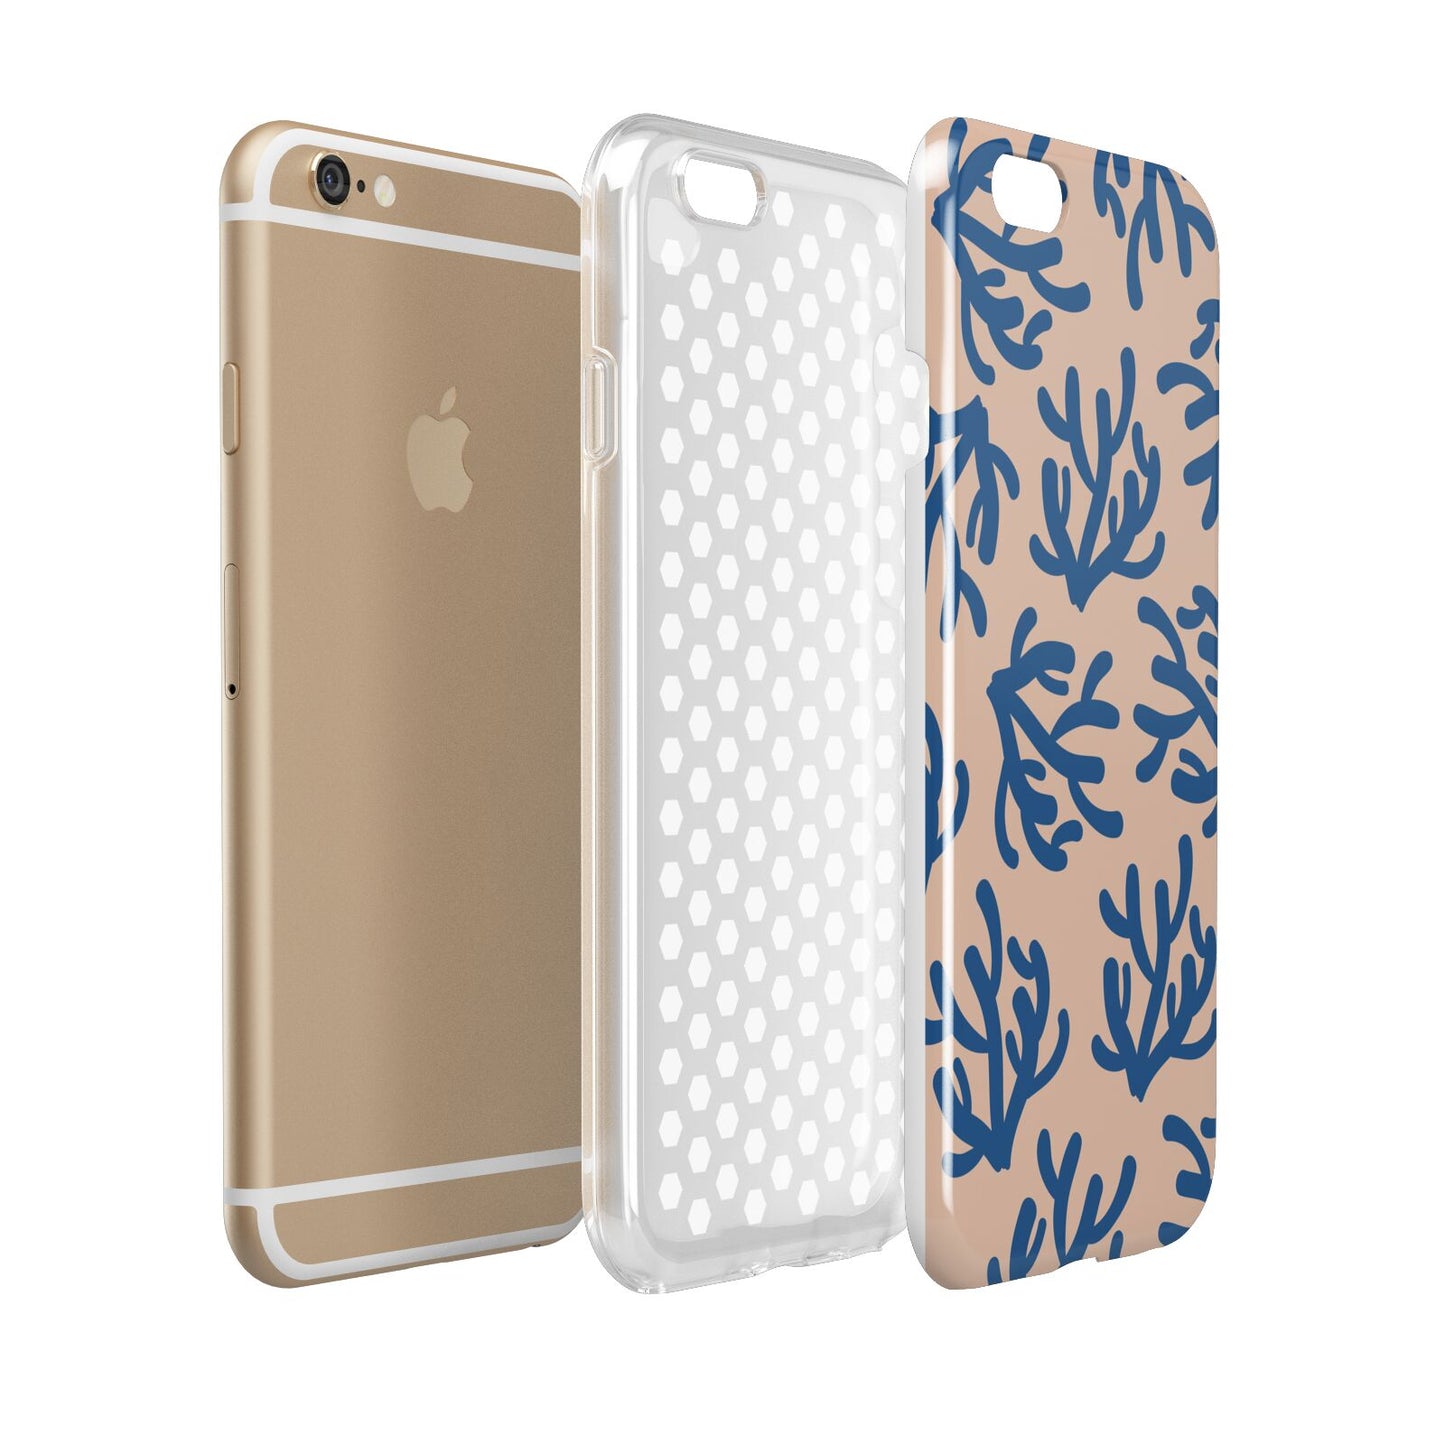 Blue Coral Apple iPhone 6 3D Tough Case Expanded view